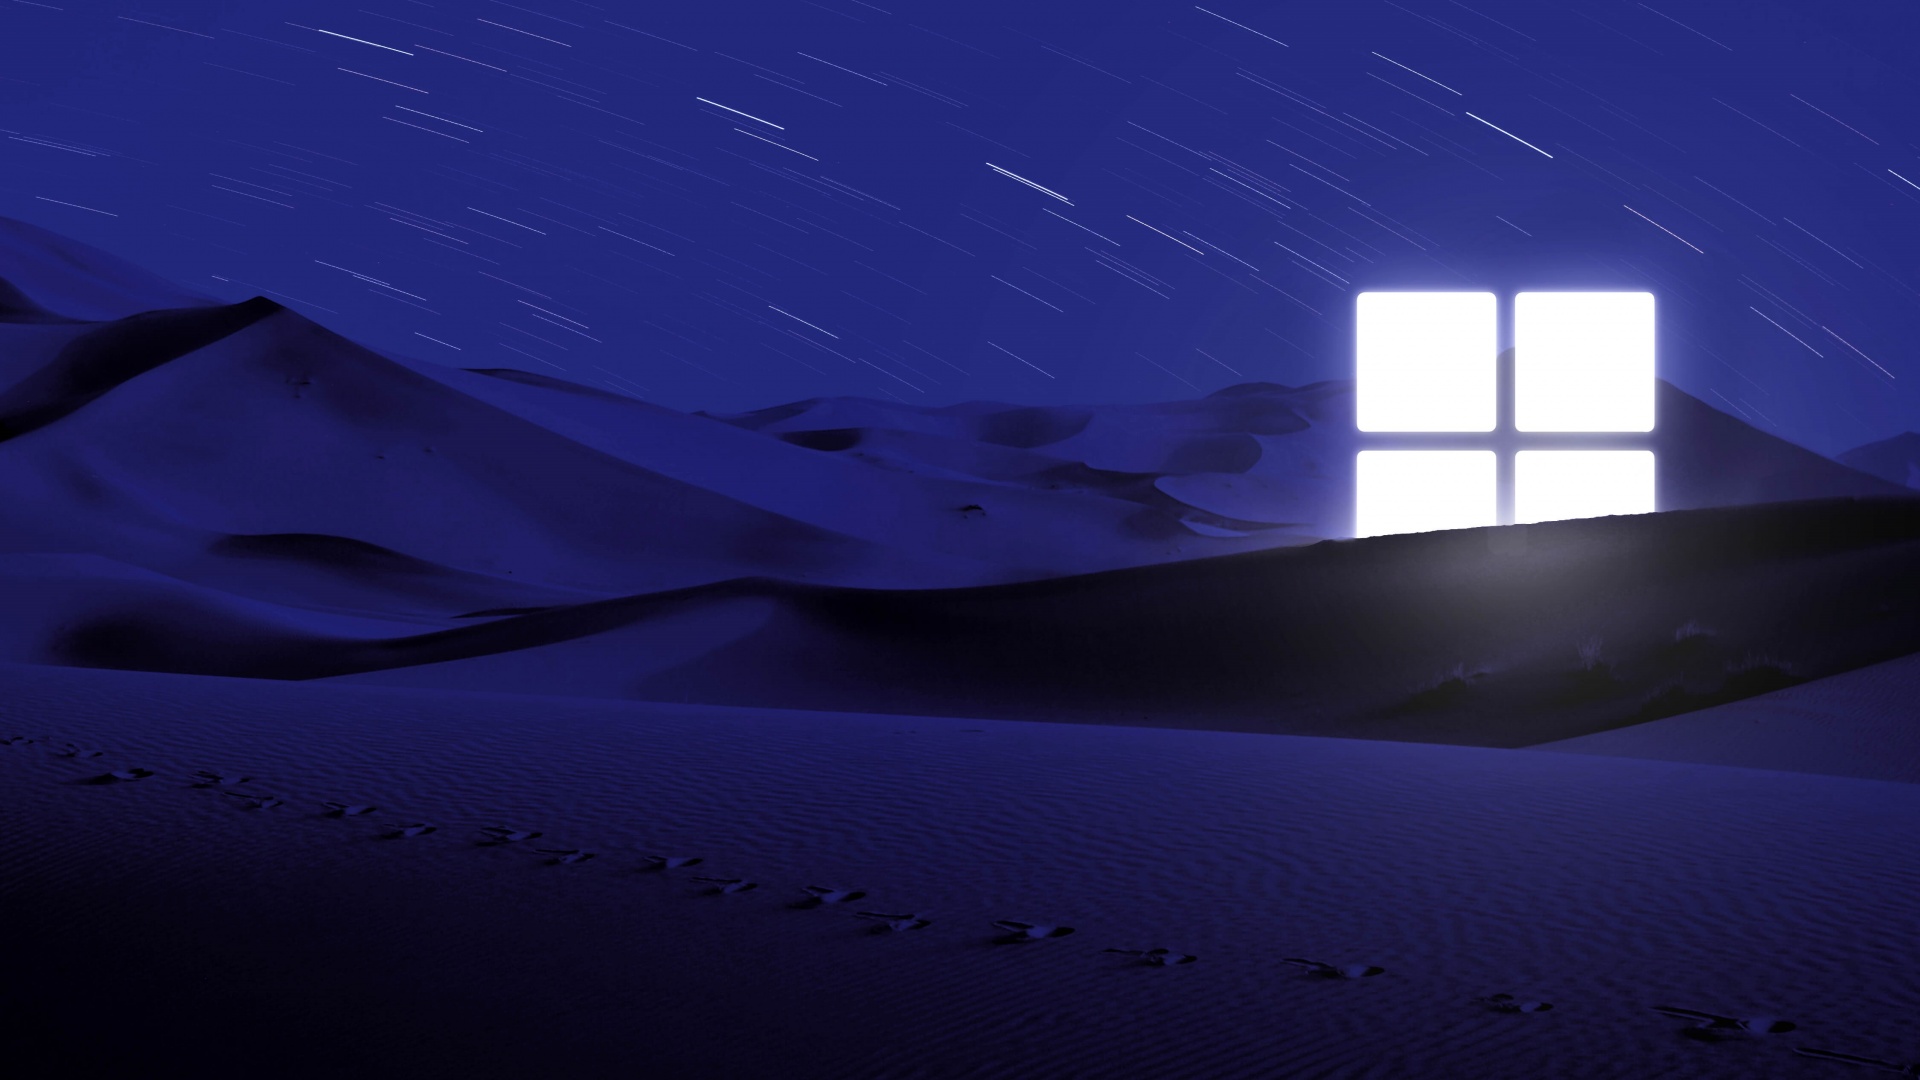 Desert 4K Wallpaper, Night, Blue, Windows logo, Glowing, Star Trails